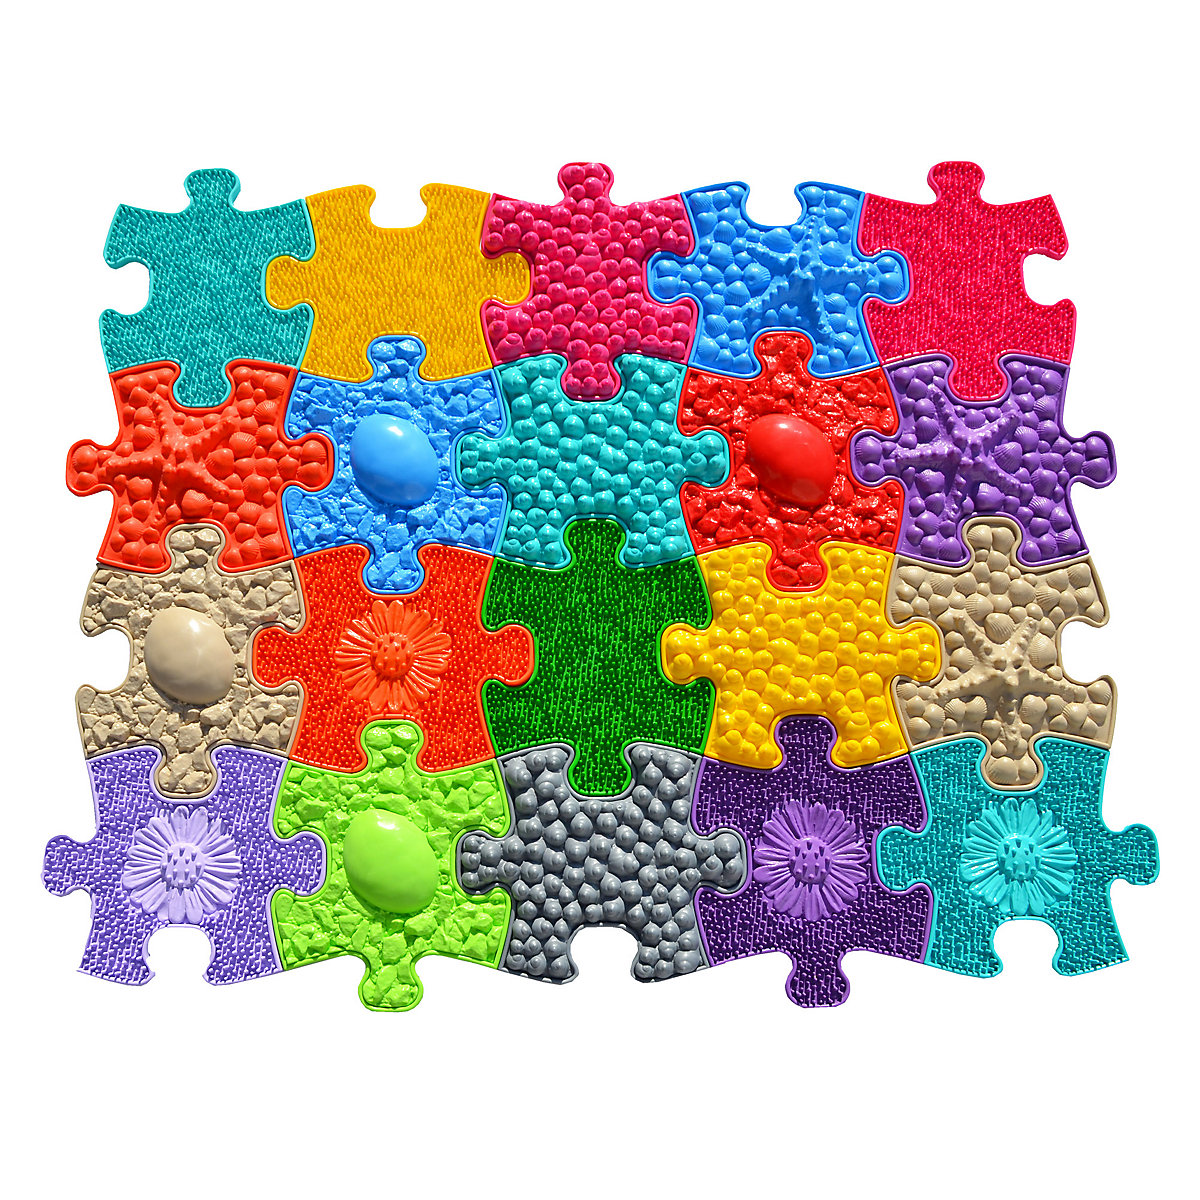 MUFFIK Sensorik Spielzeug Sensorik Strukturmatten Mini Puzzle-Set 20 kleine Teile für taktile Wahrnehmung